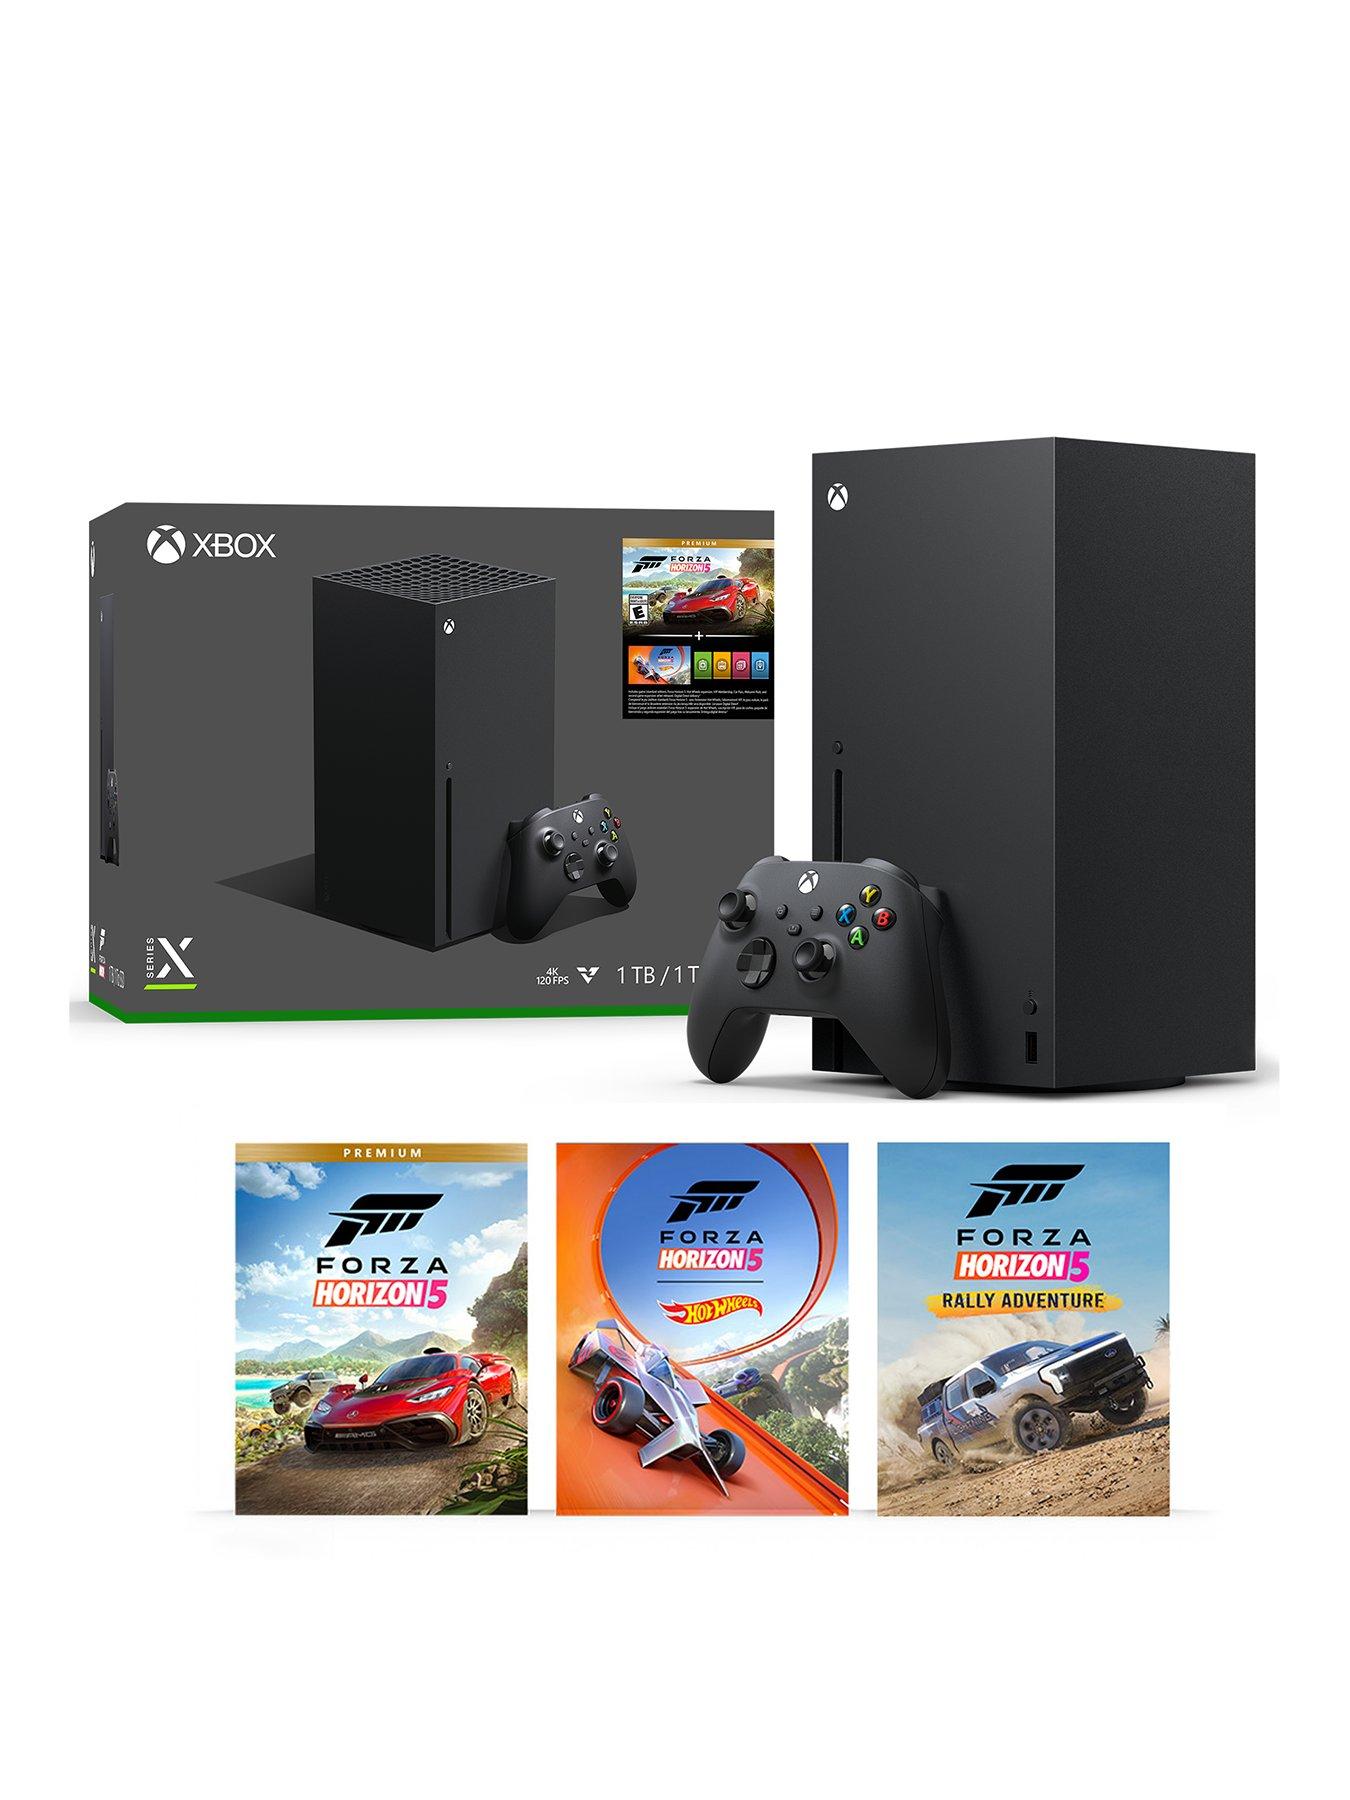  Xbox One S 500GB Console - Forza Horizon 3 Hot Wheels Bundle  [Discontinued] : Electronics